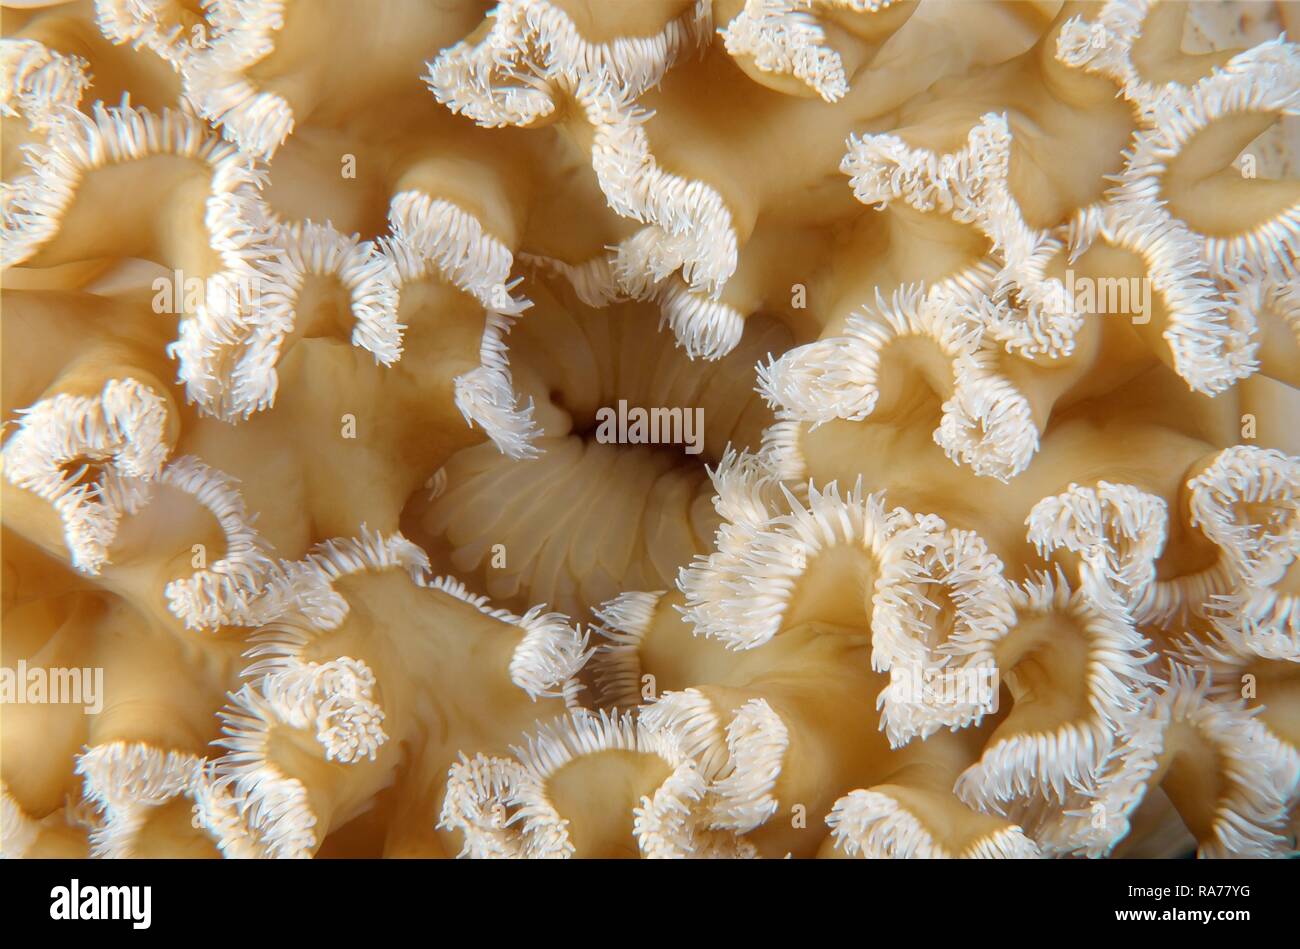 White senile anemone, Plumose anemone or Frilled anemone (Metridium senile), Japan Sea, Far East, Primorsky Krai Stock Photo